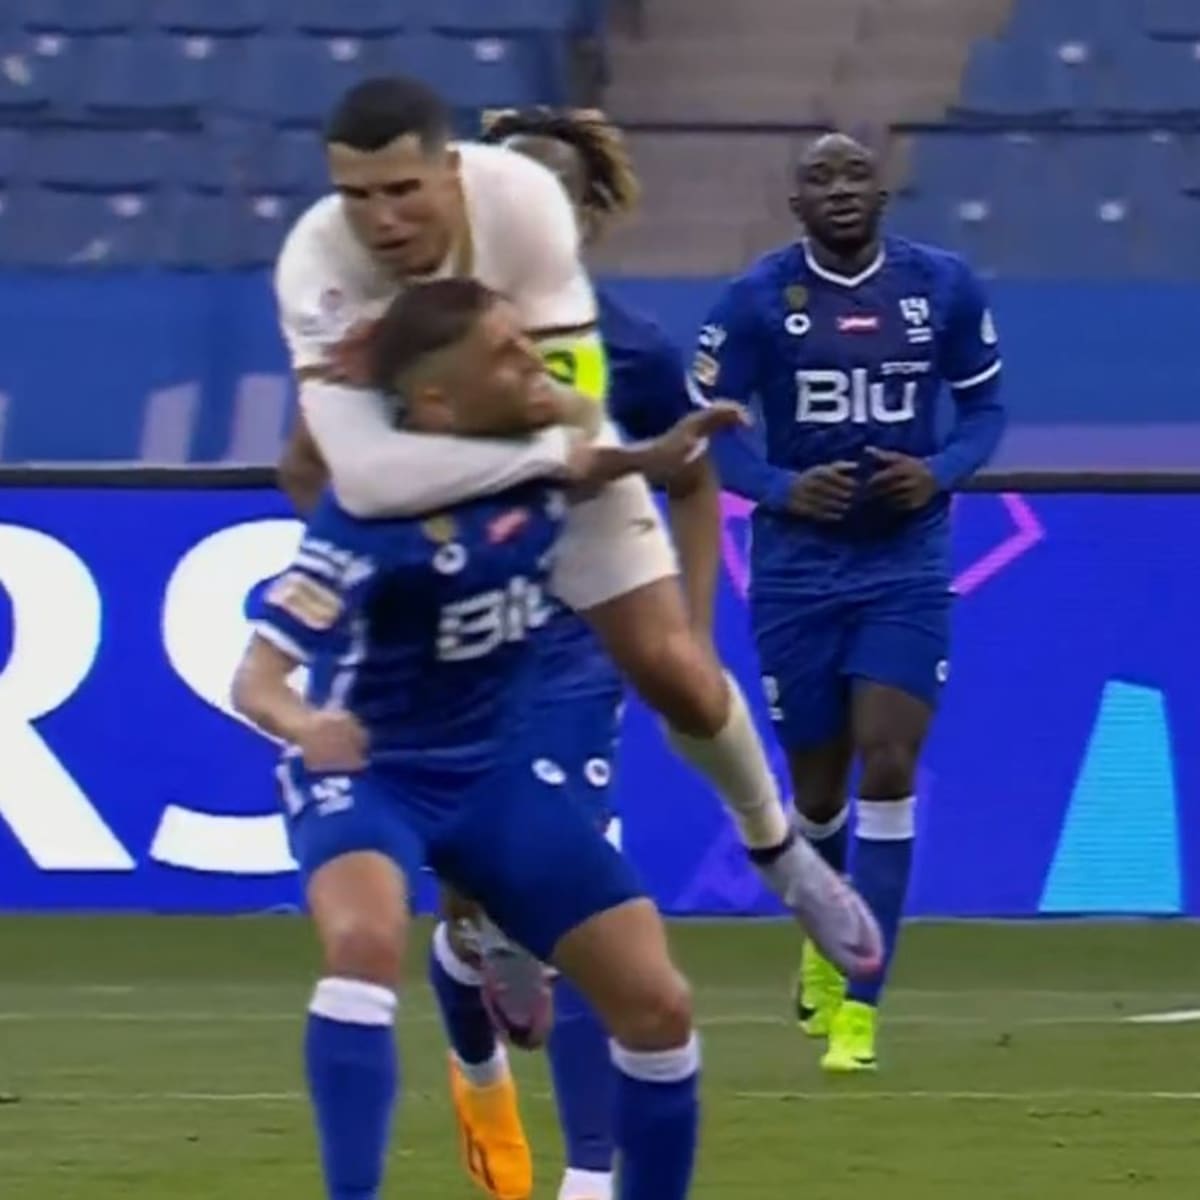 Bicycle kick goal knocks Cristiano Ronaldo's Al Nassr out of cup - Futbol  on FanNation